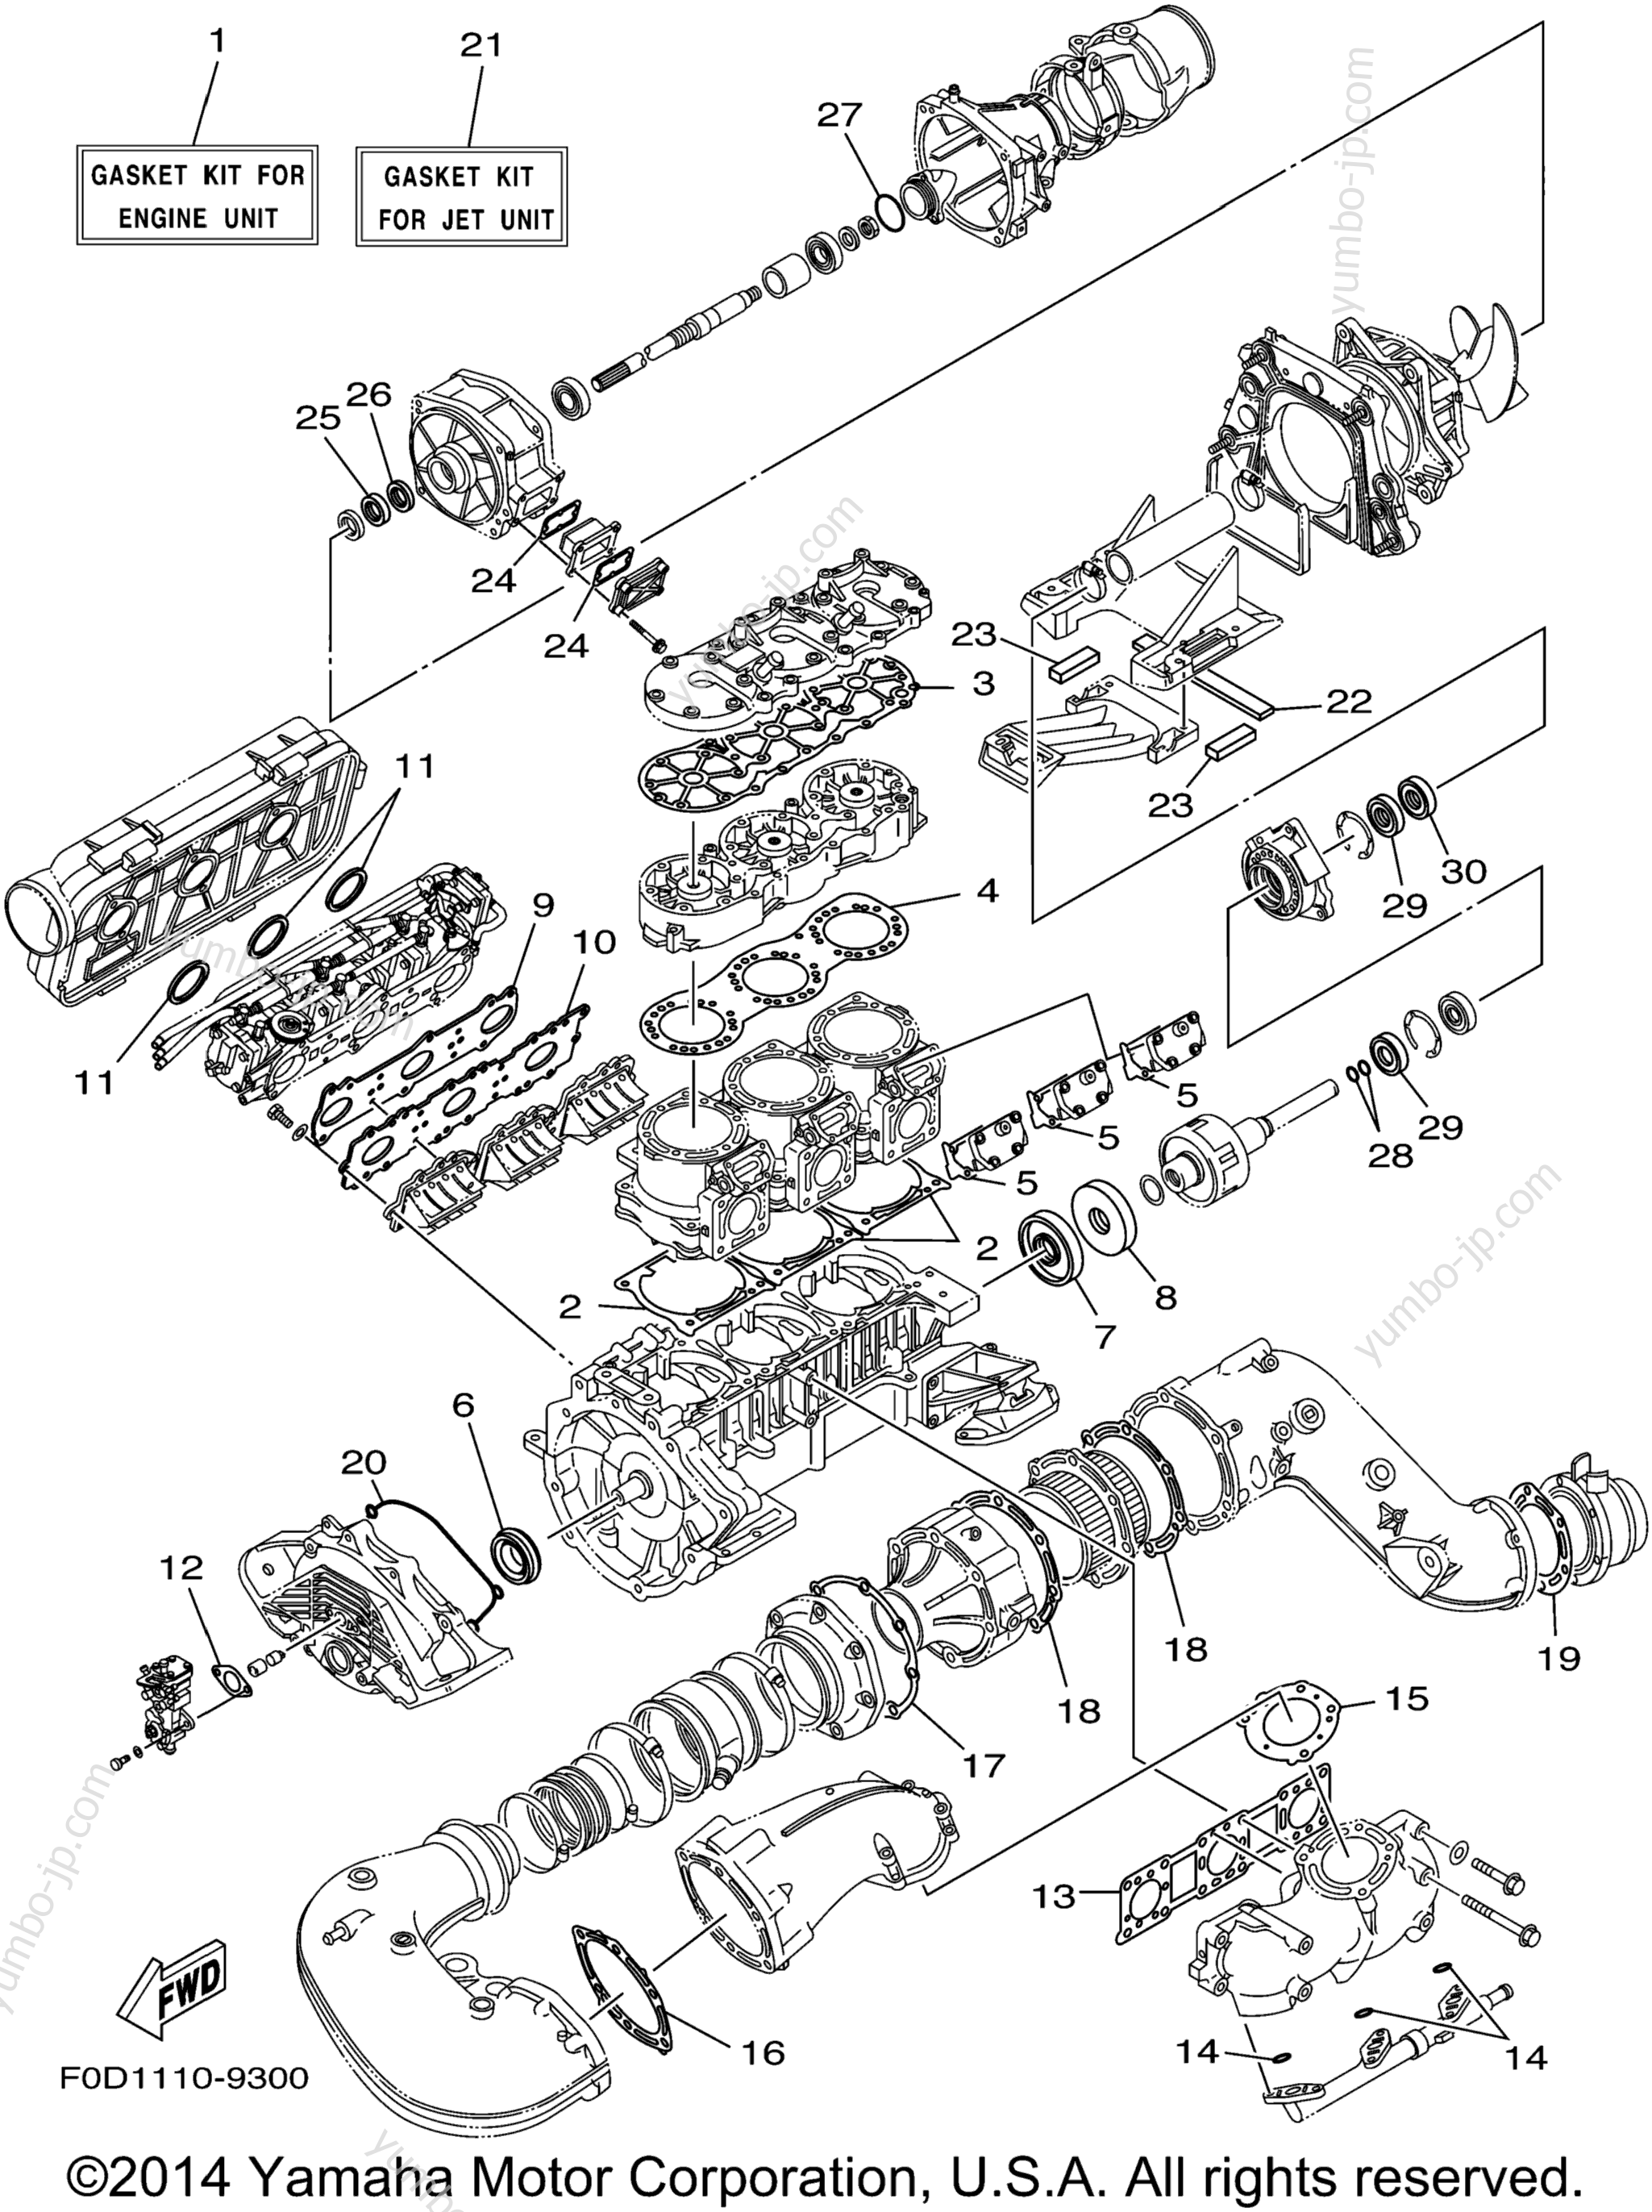 Repair Kit 1 для гидроциклов YAMAHA WAVE RUNNER XL1200 LTD (XA1200X) 1999 г.